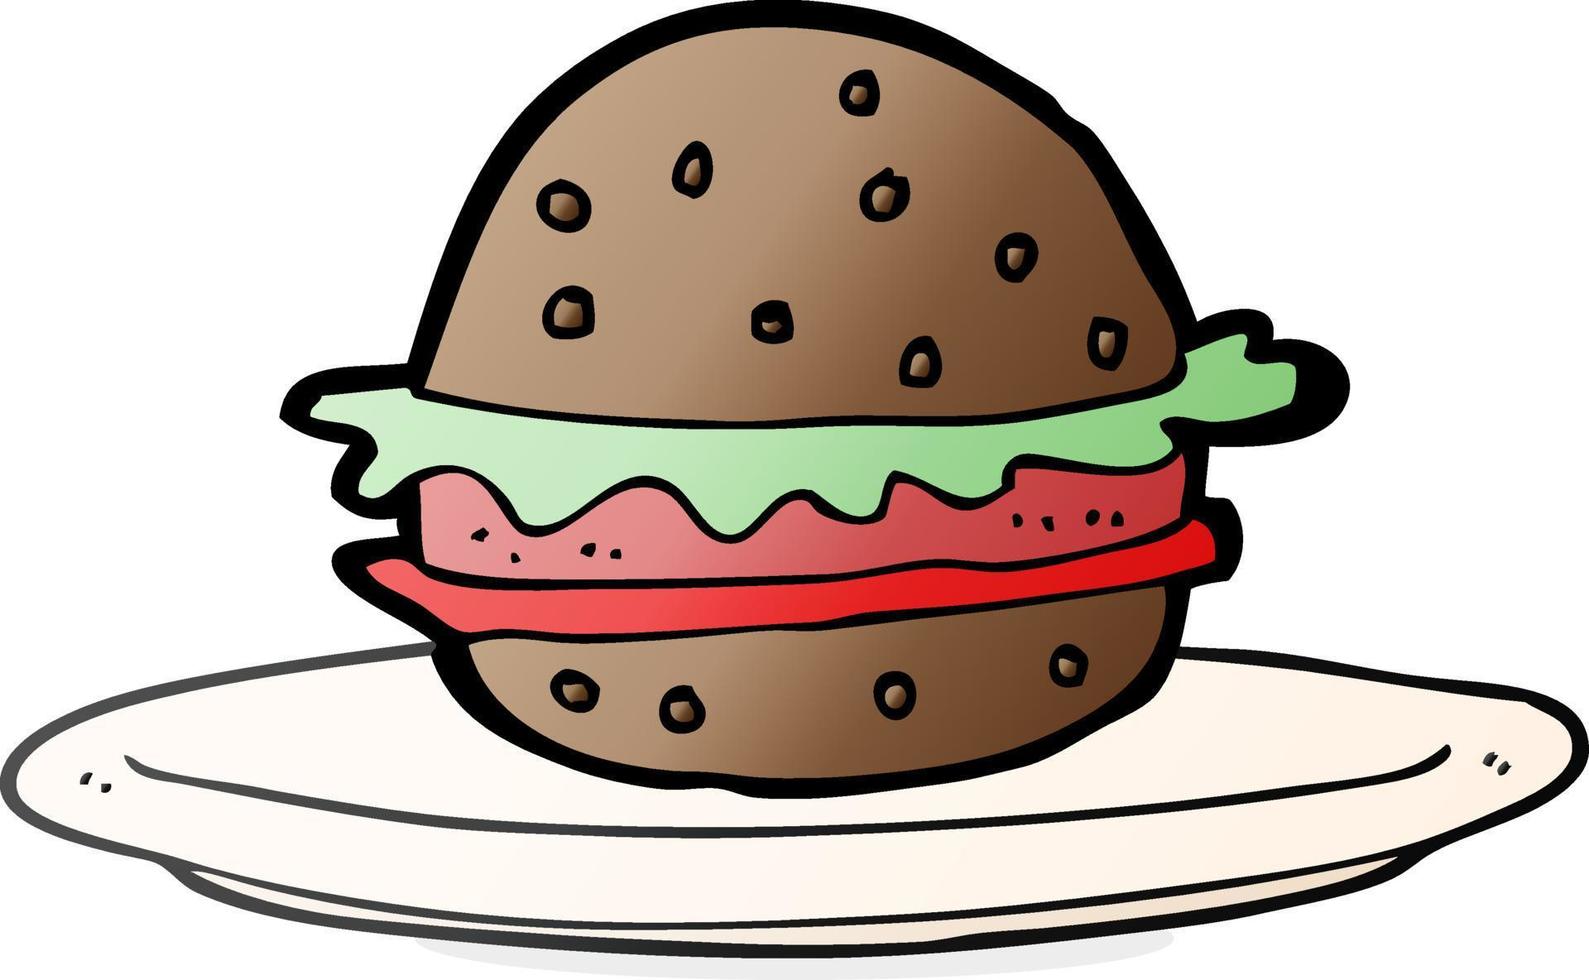 freehand drawn cartoon burger on plate vector